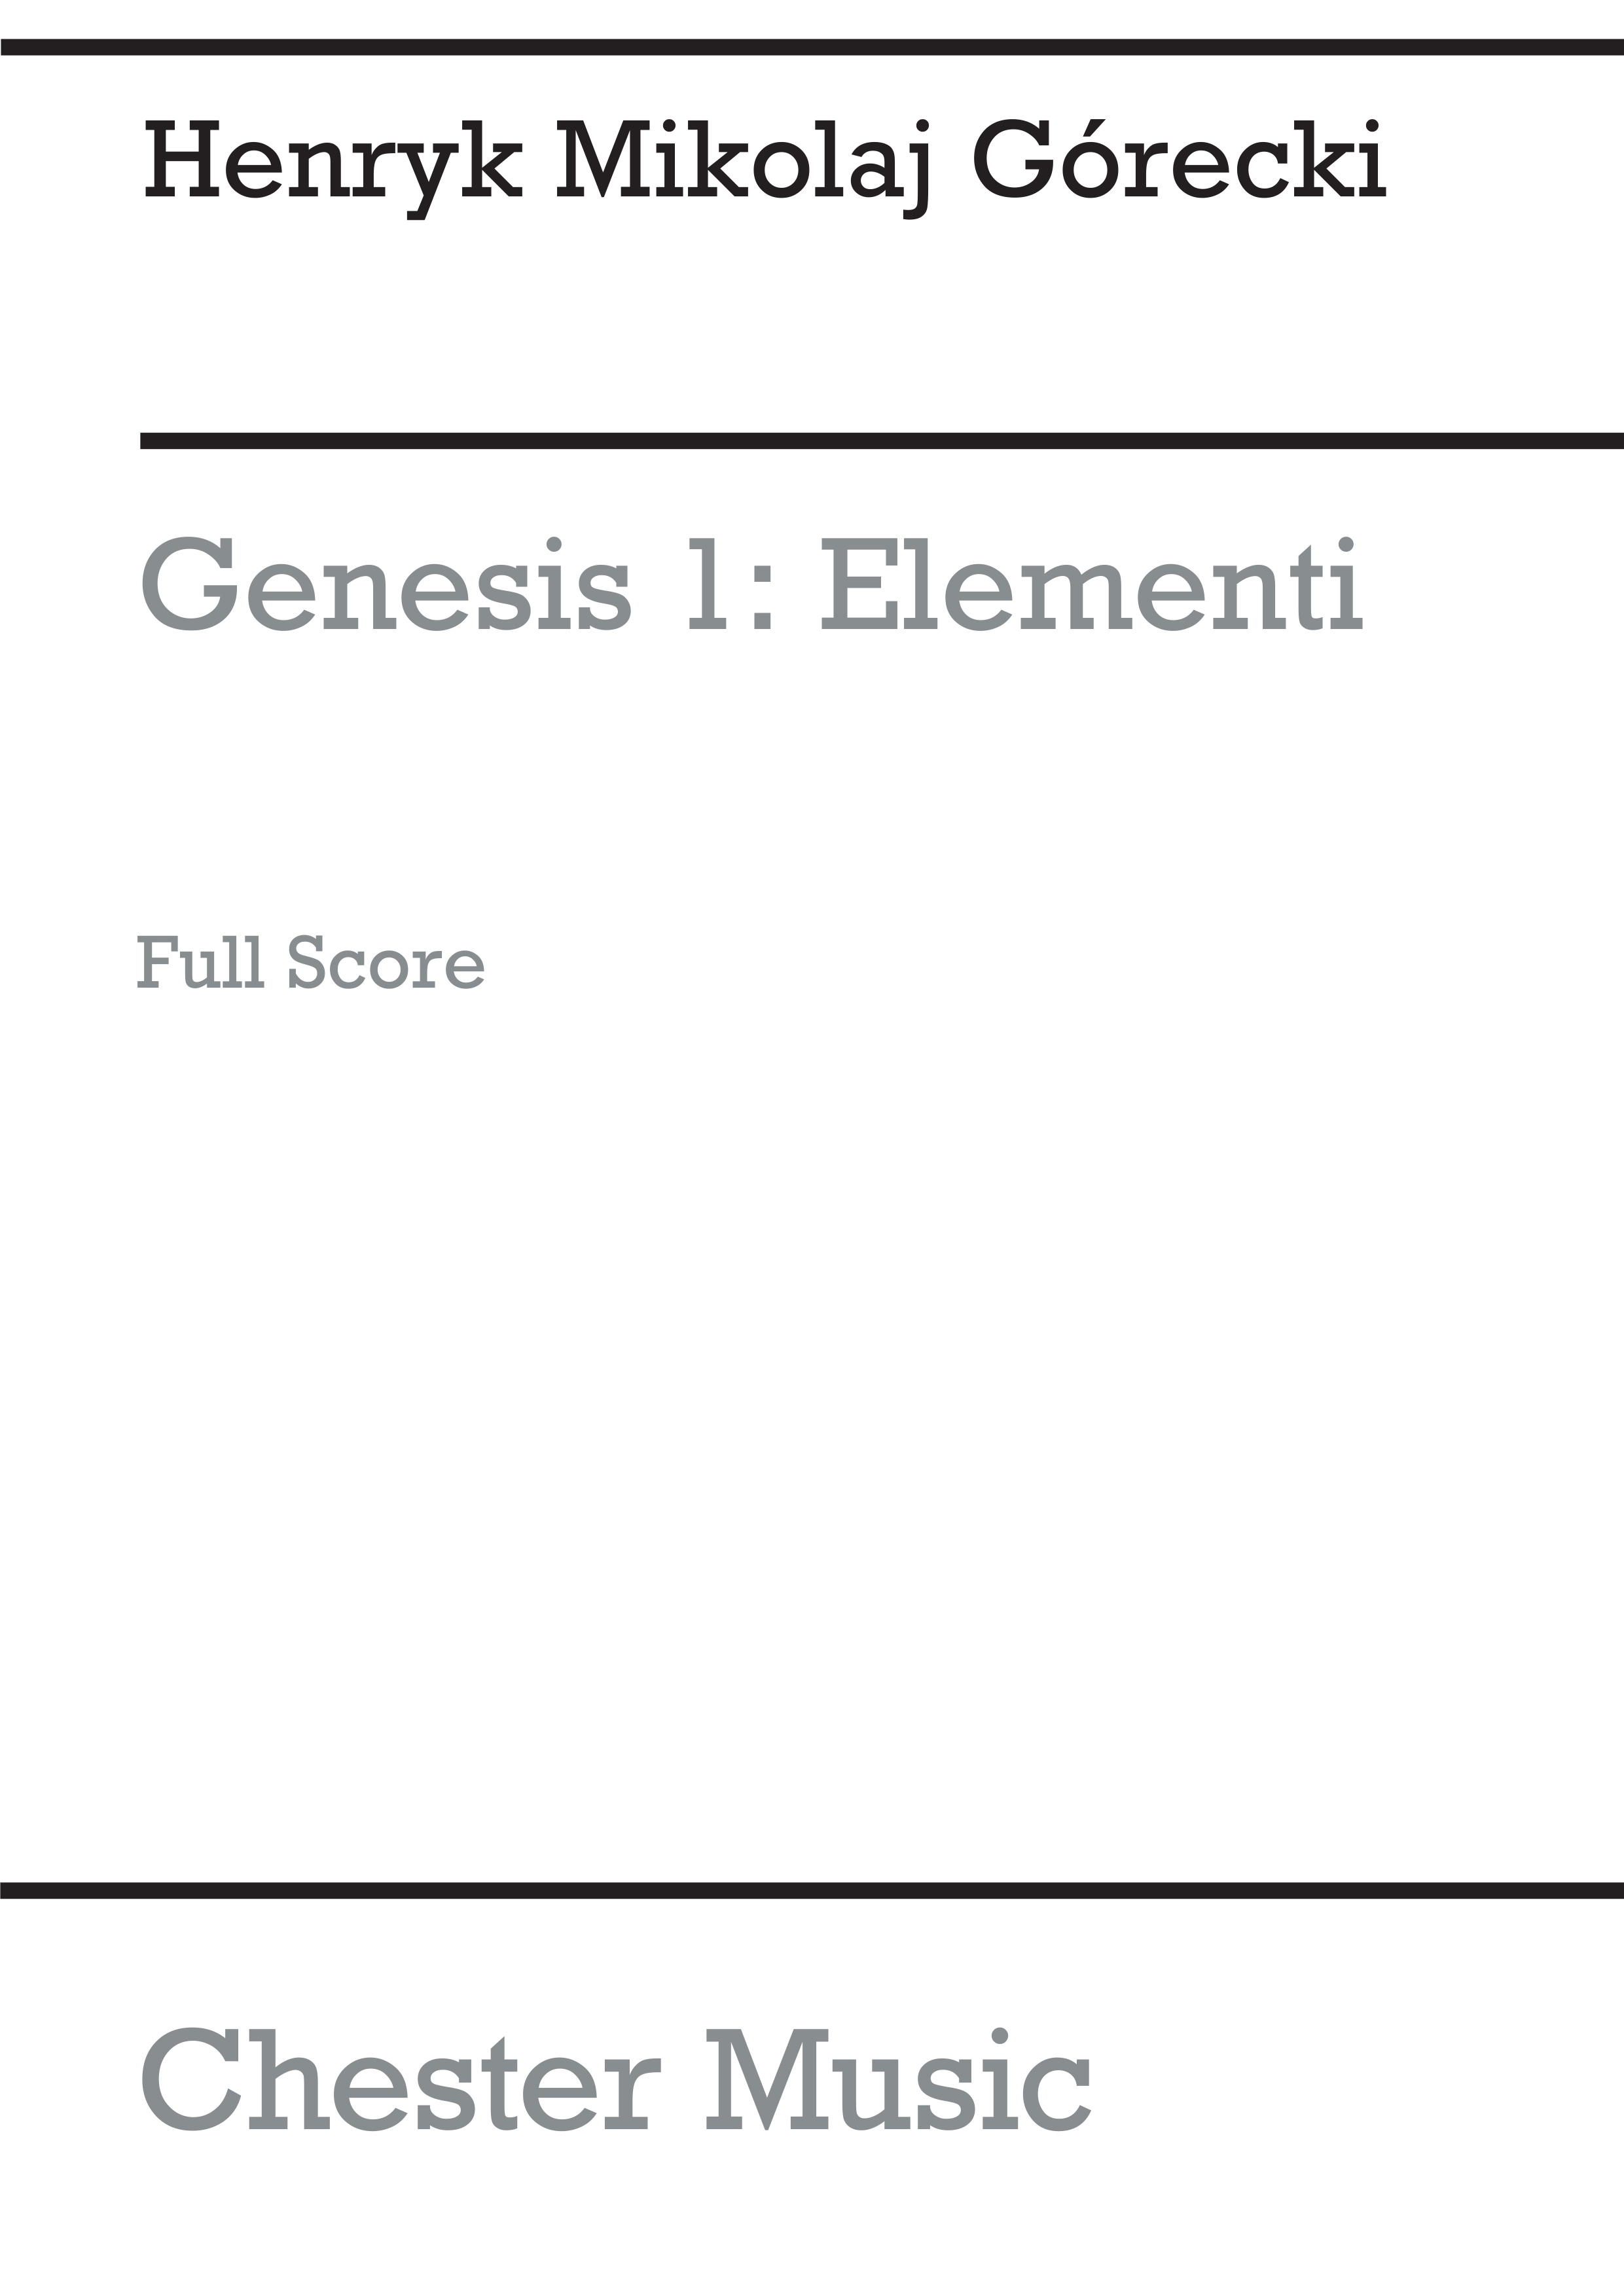 Henryk Mikolaj Grecki: Genesis 1 - Elementi Op.19 No.1 (Full Score): String